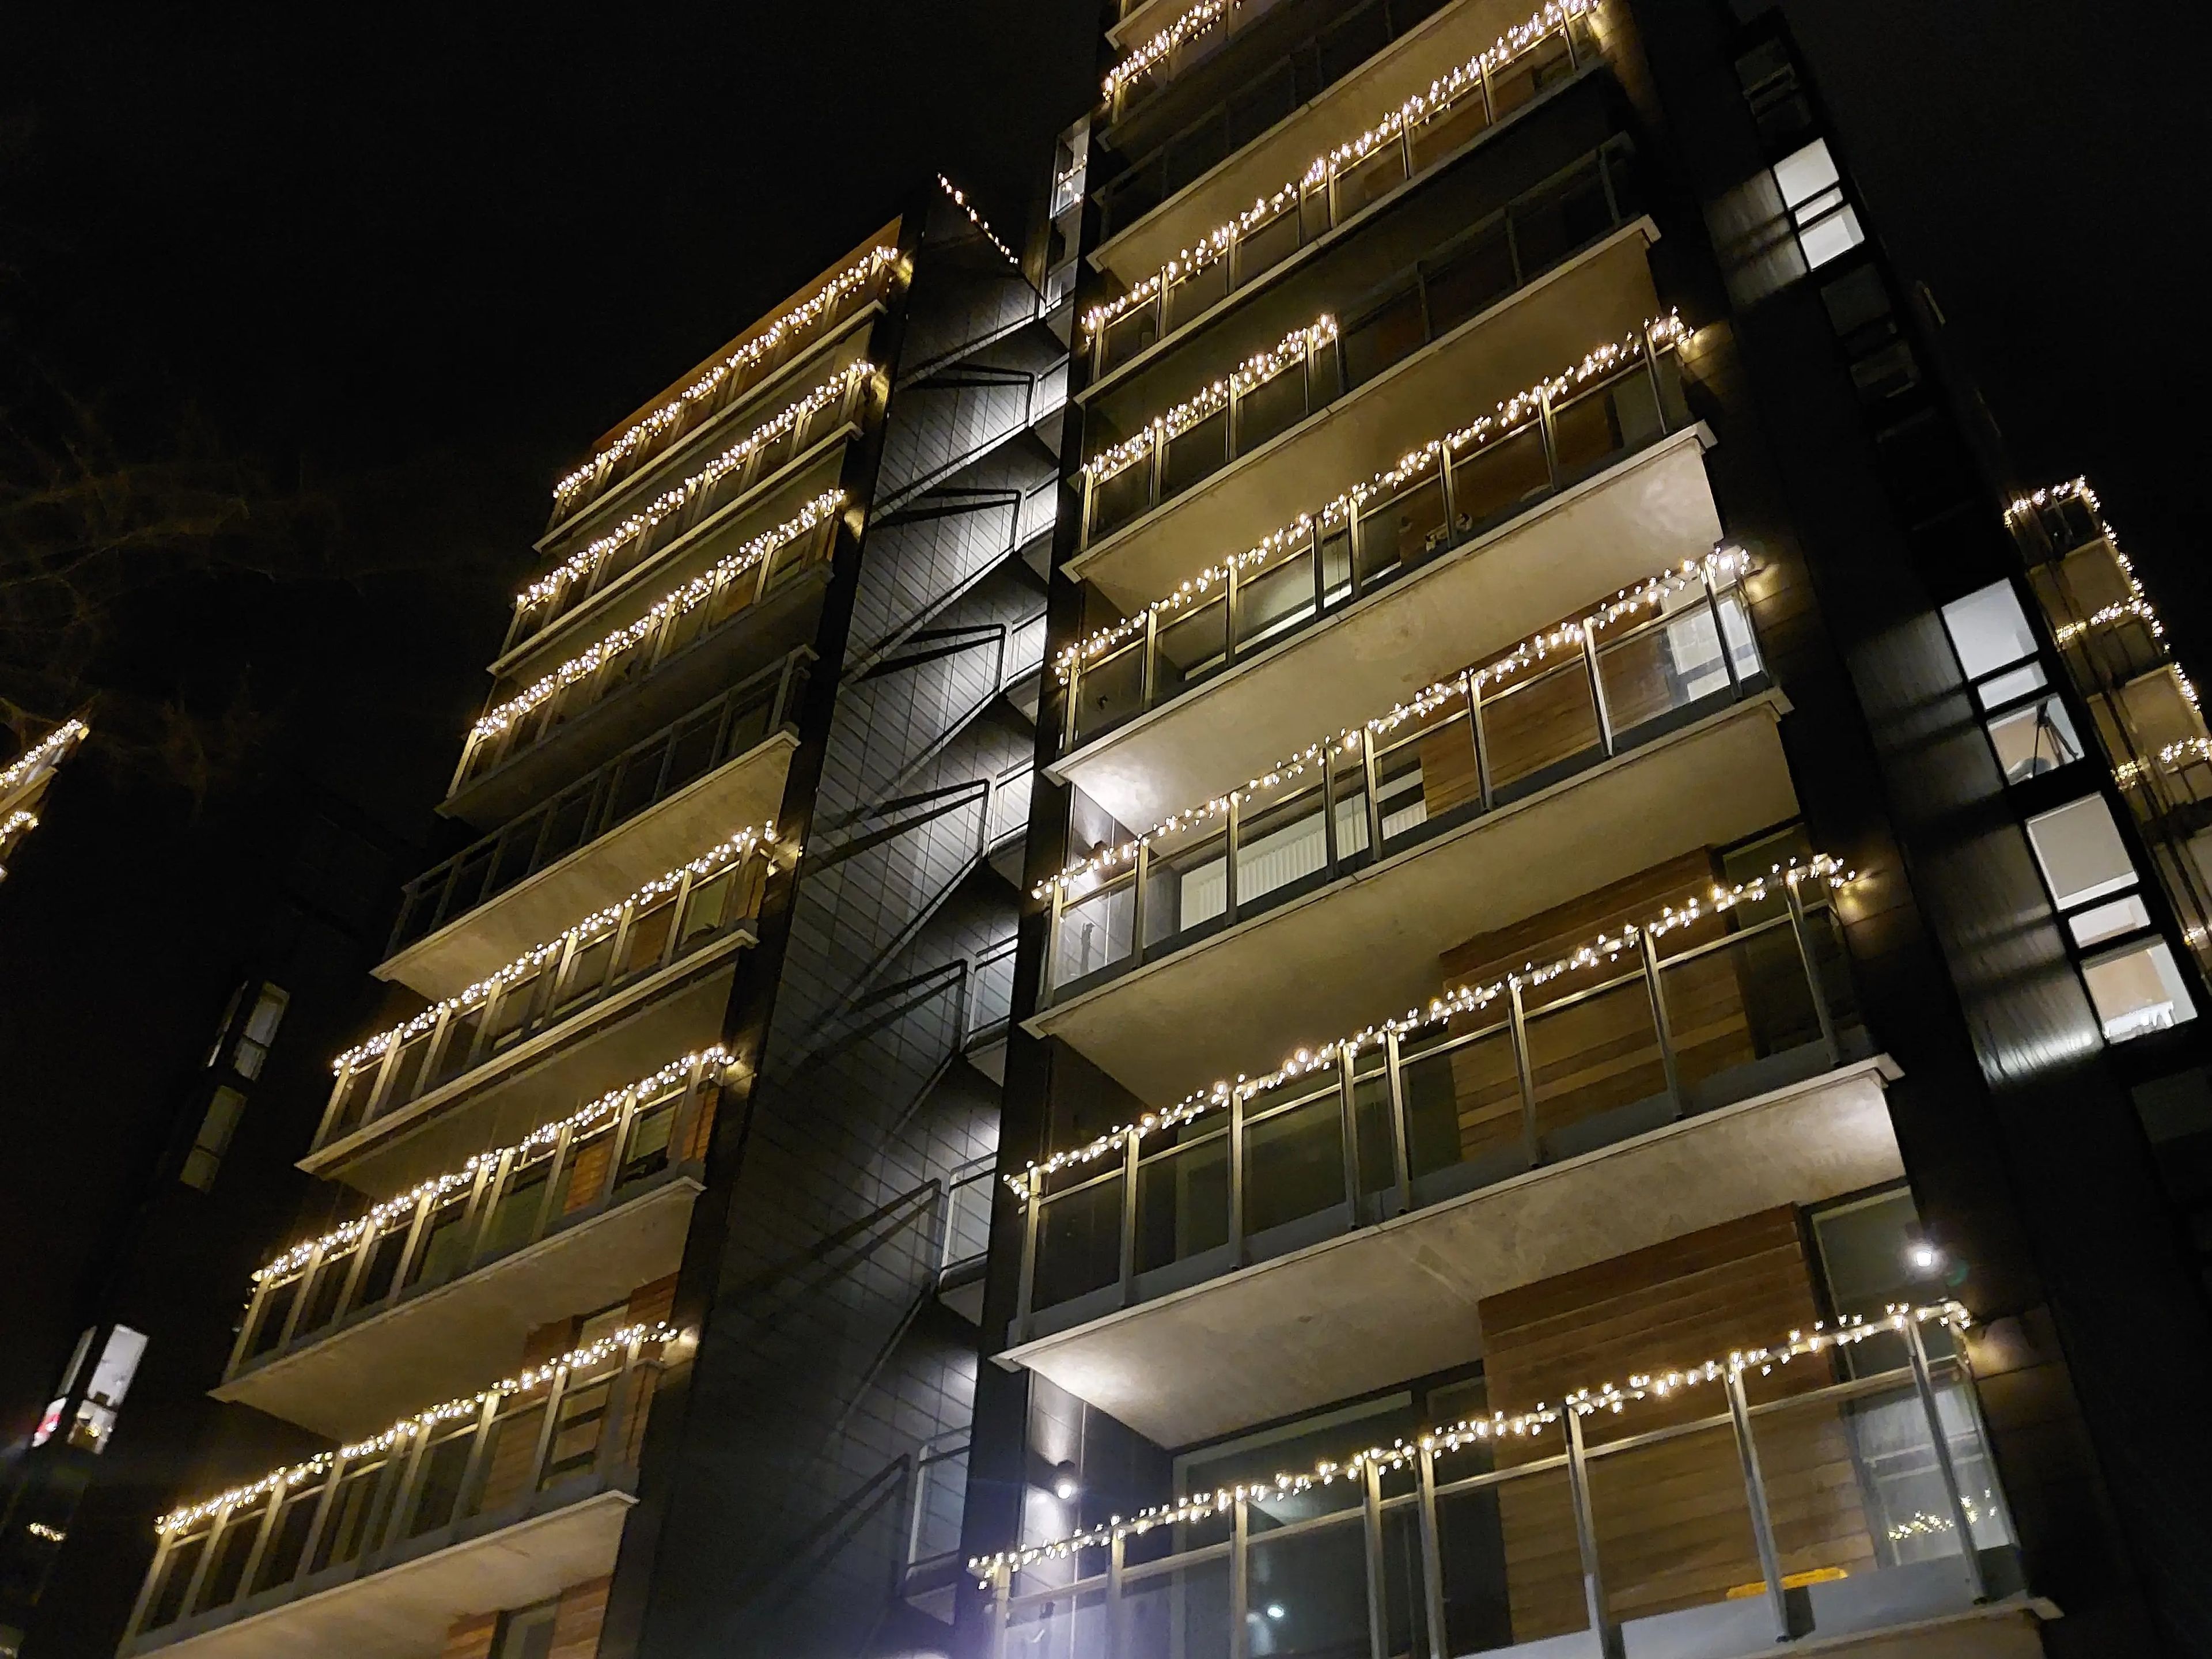 Muchas comunidades de vecinos coordinan las luces que compran. Este bloque de apartamentos de Reikiavik tenía luces a juego en cada balcón.